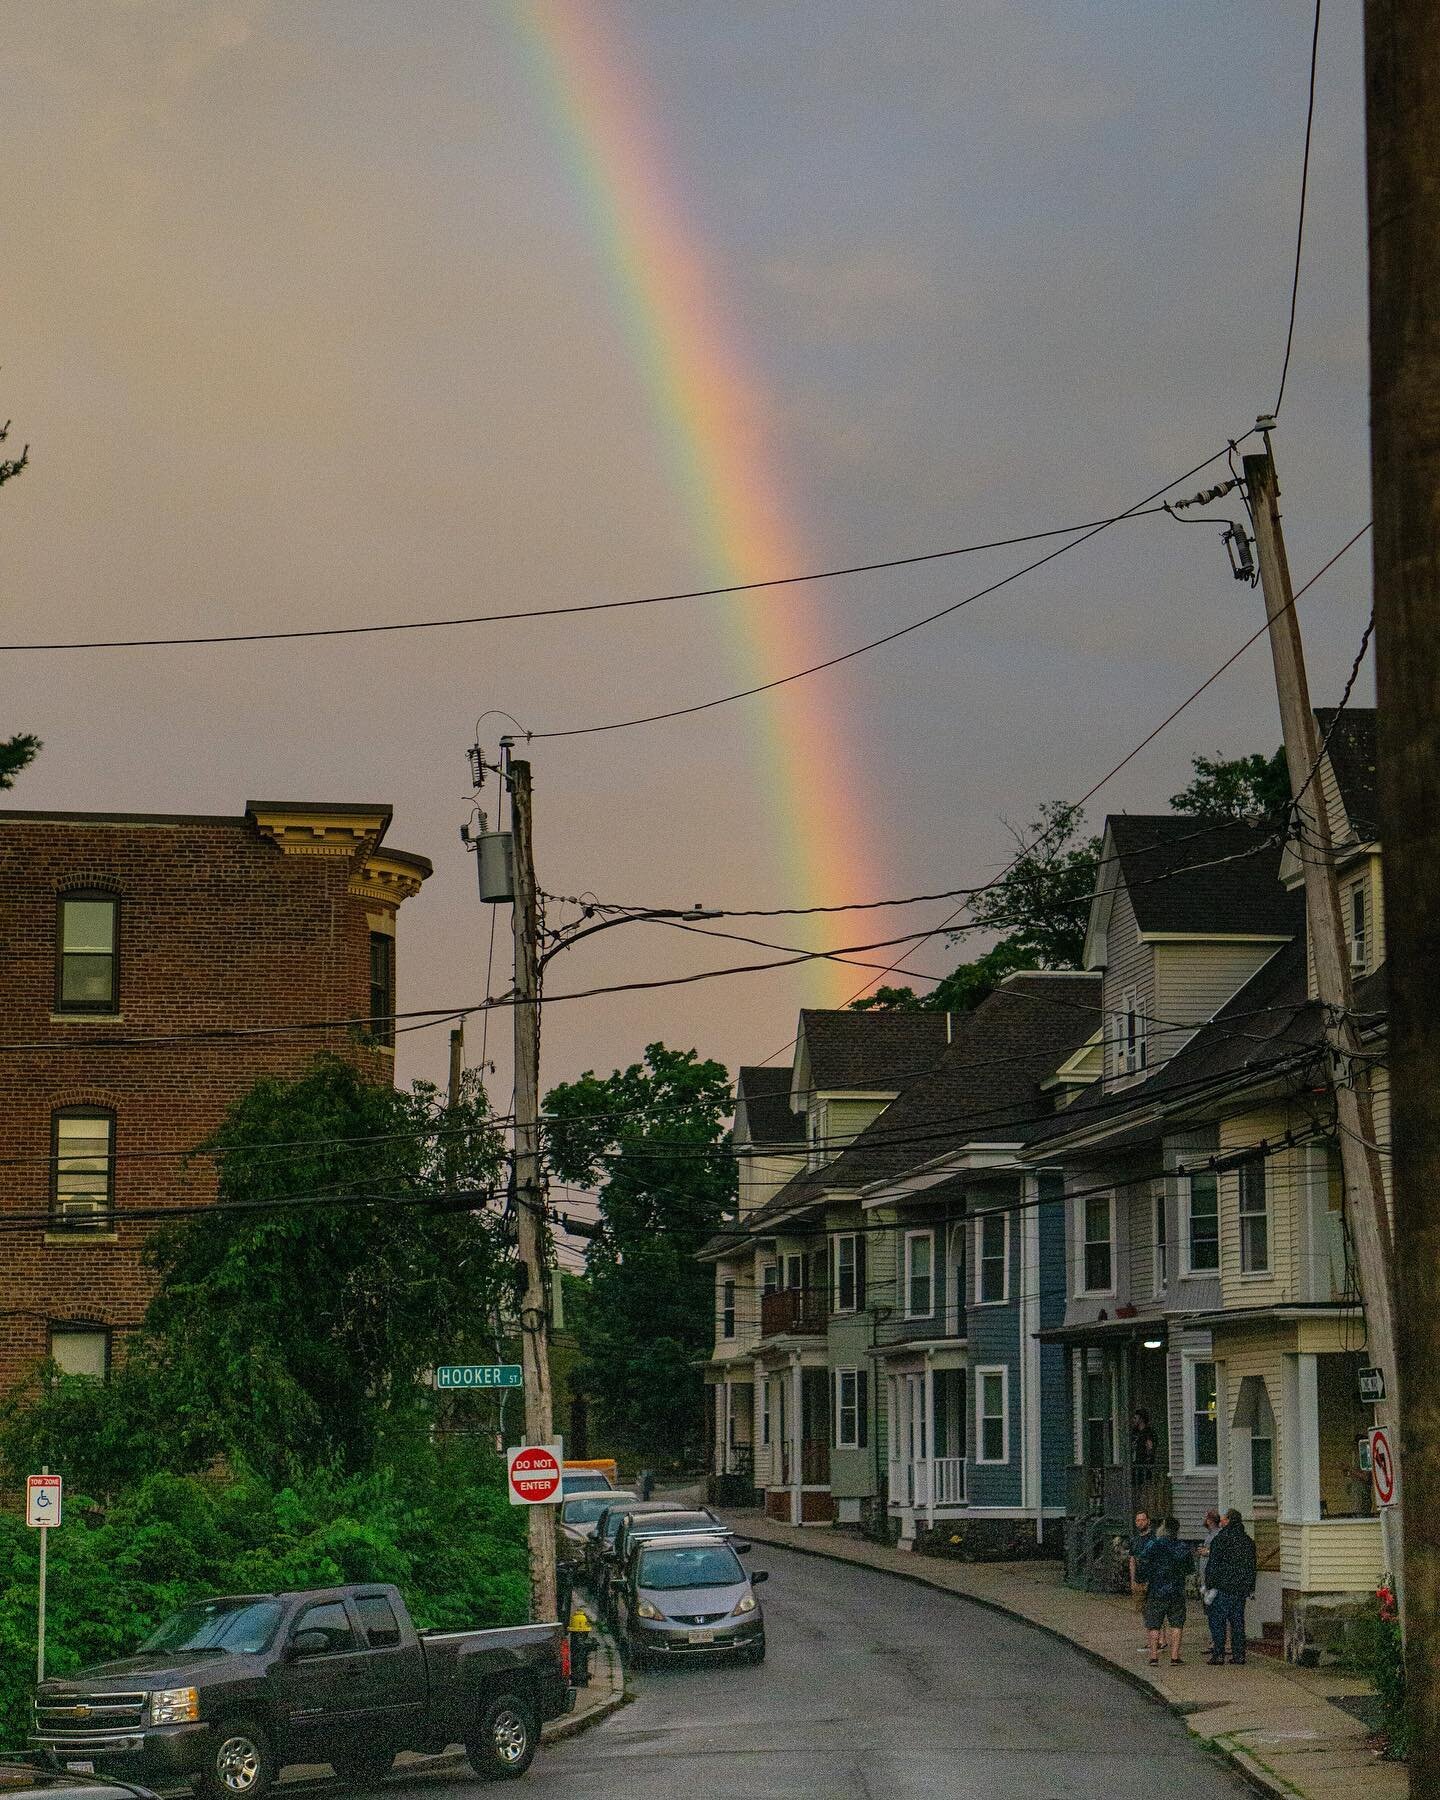 Allston rainbow 🌈 ☔️ 
Sonya6000
.
.
.
.
.
.
 #moodygrams #agameoftones #bostonglobelife  #streetstyle #usaprimeshot #rainbow #iheartboston #bostondotcom #igersboston #igboston #igersnewengland #igersmass #followingboston #sonyalpha #sonya6000 #igers